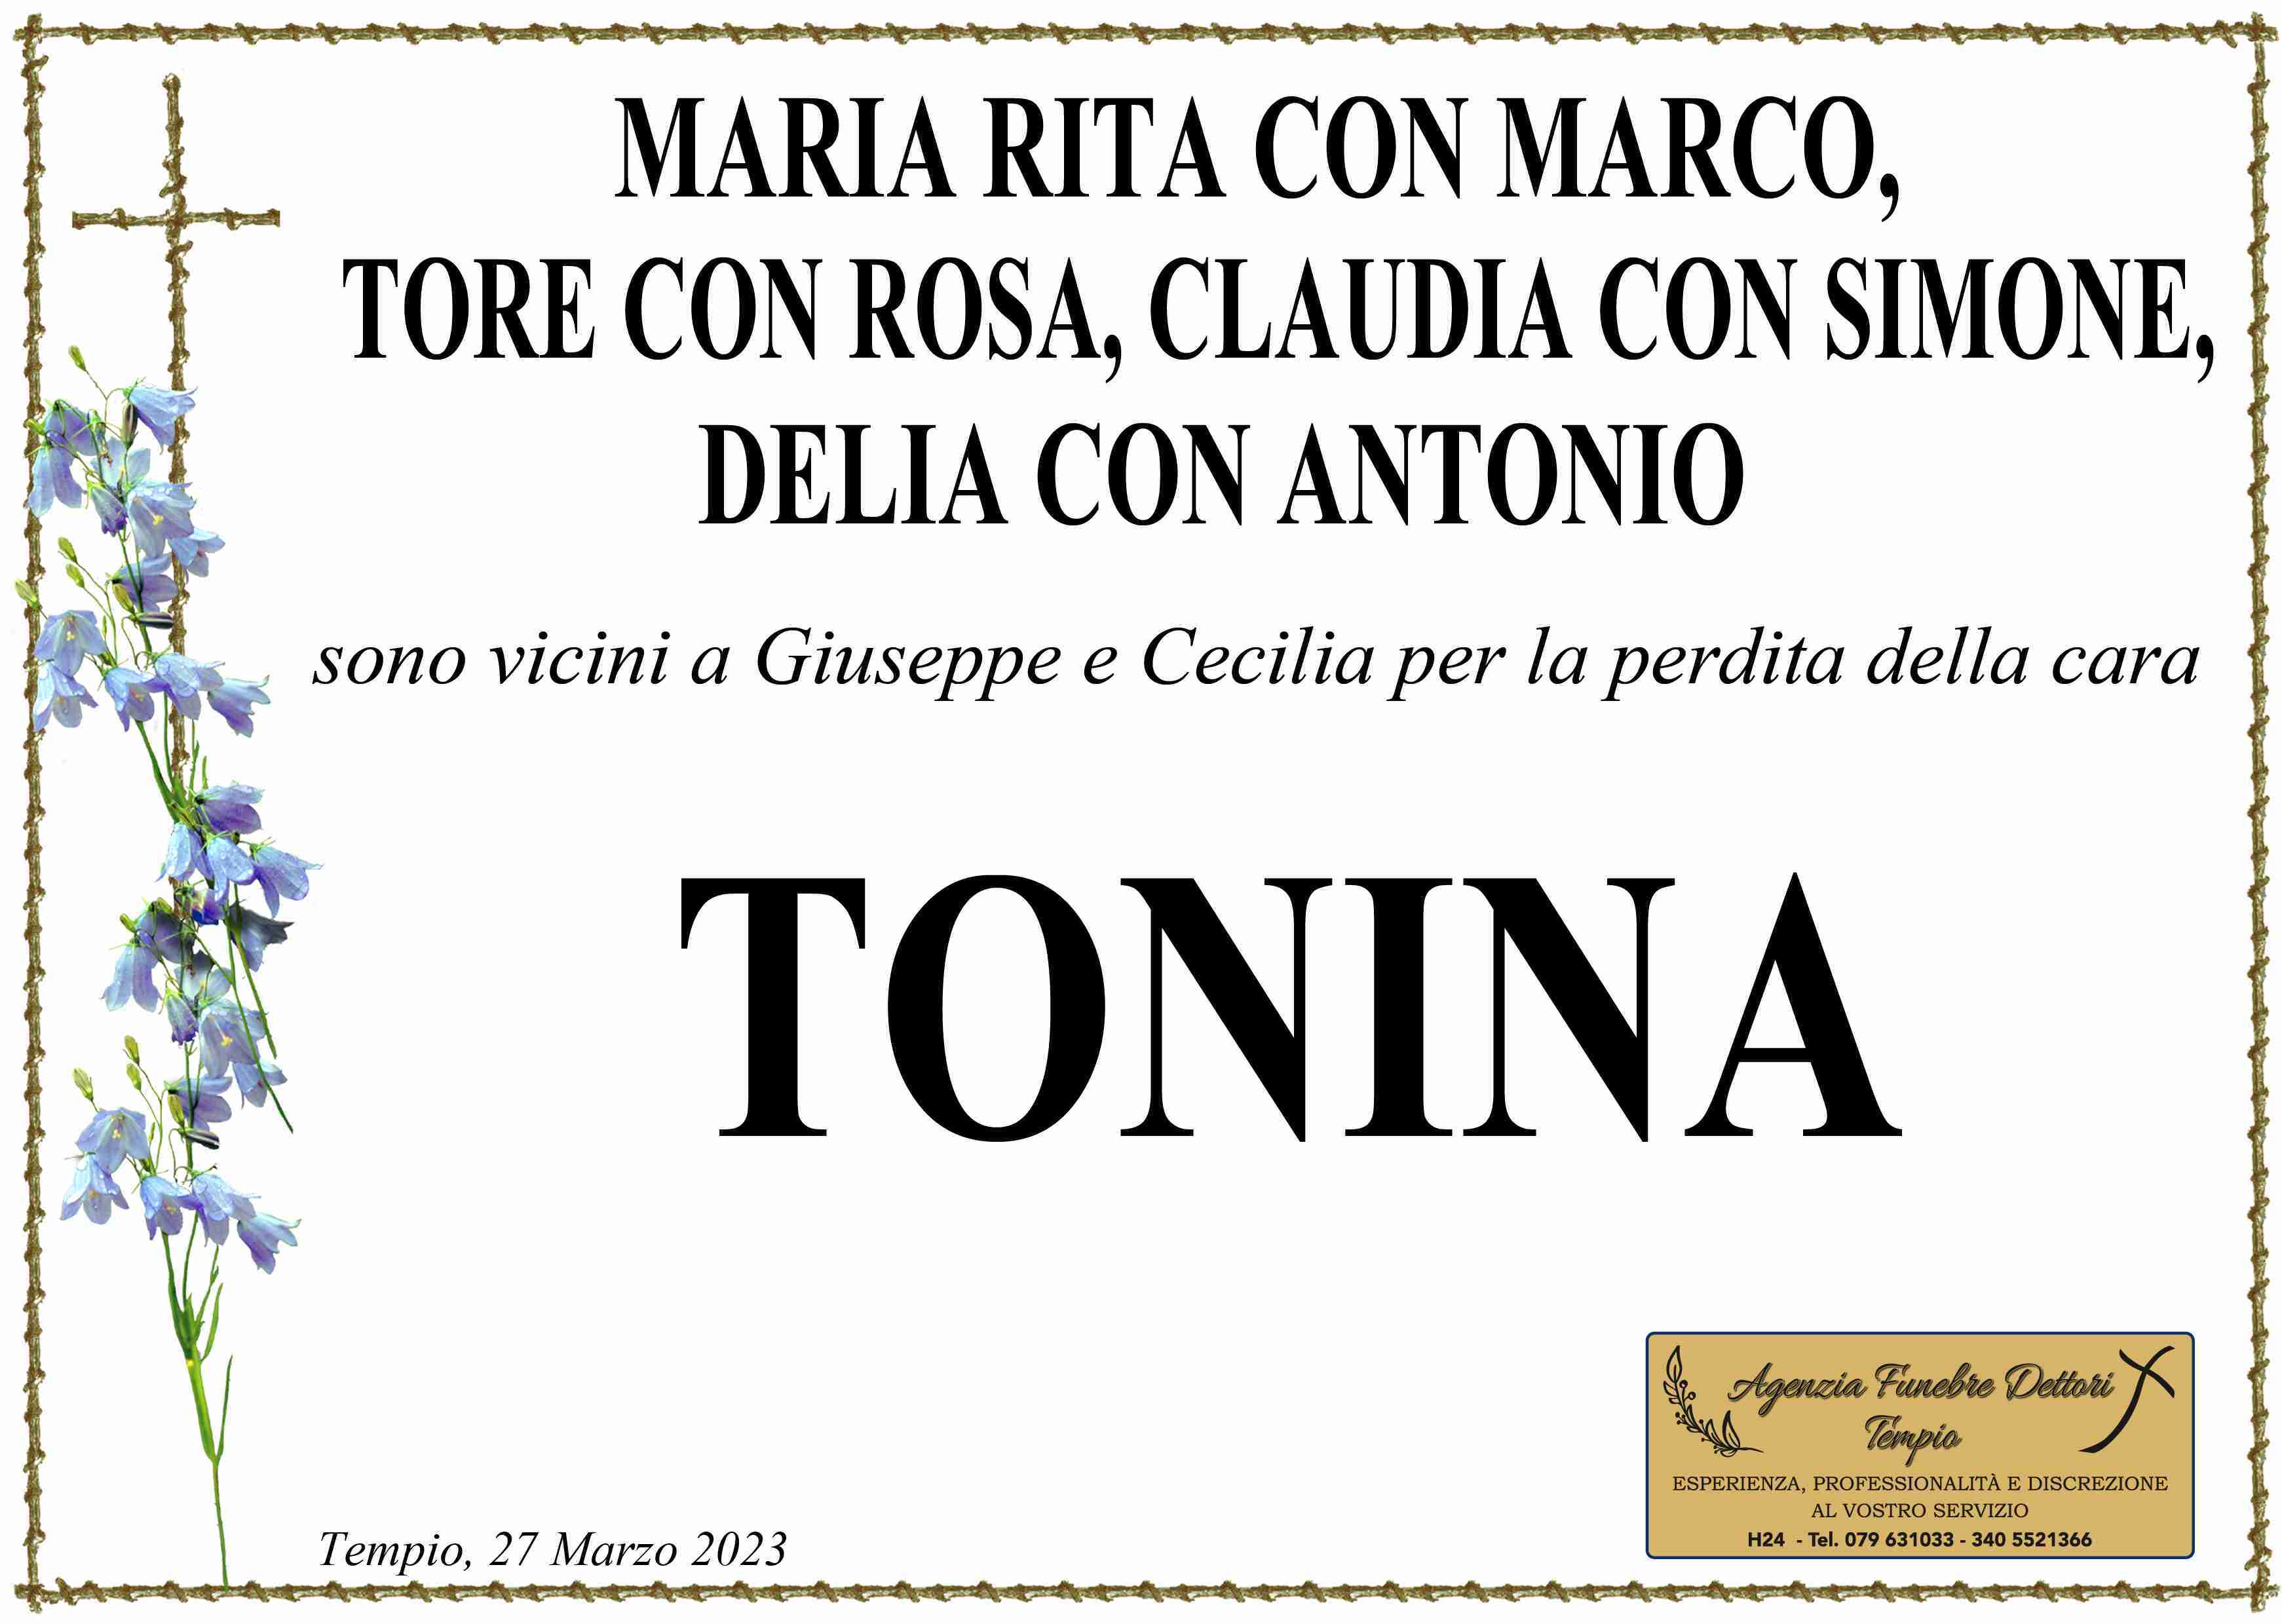 Tonina Pinna